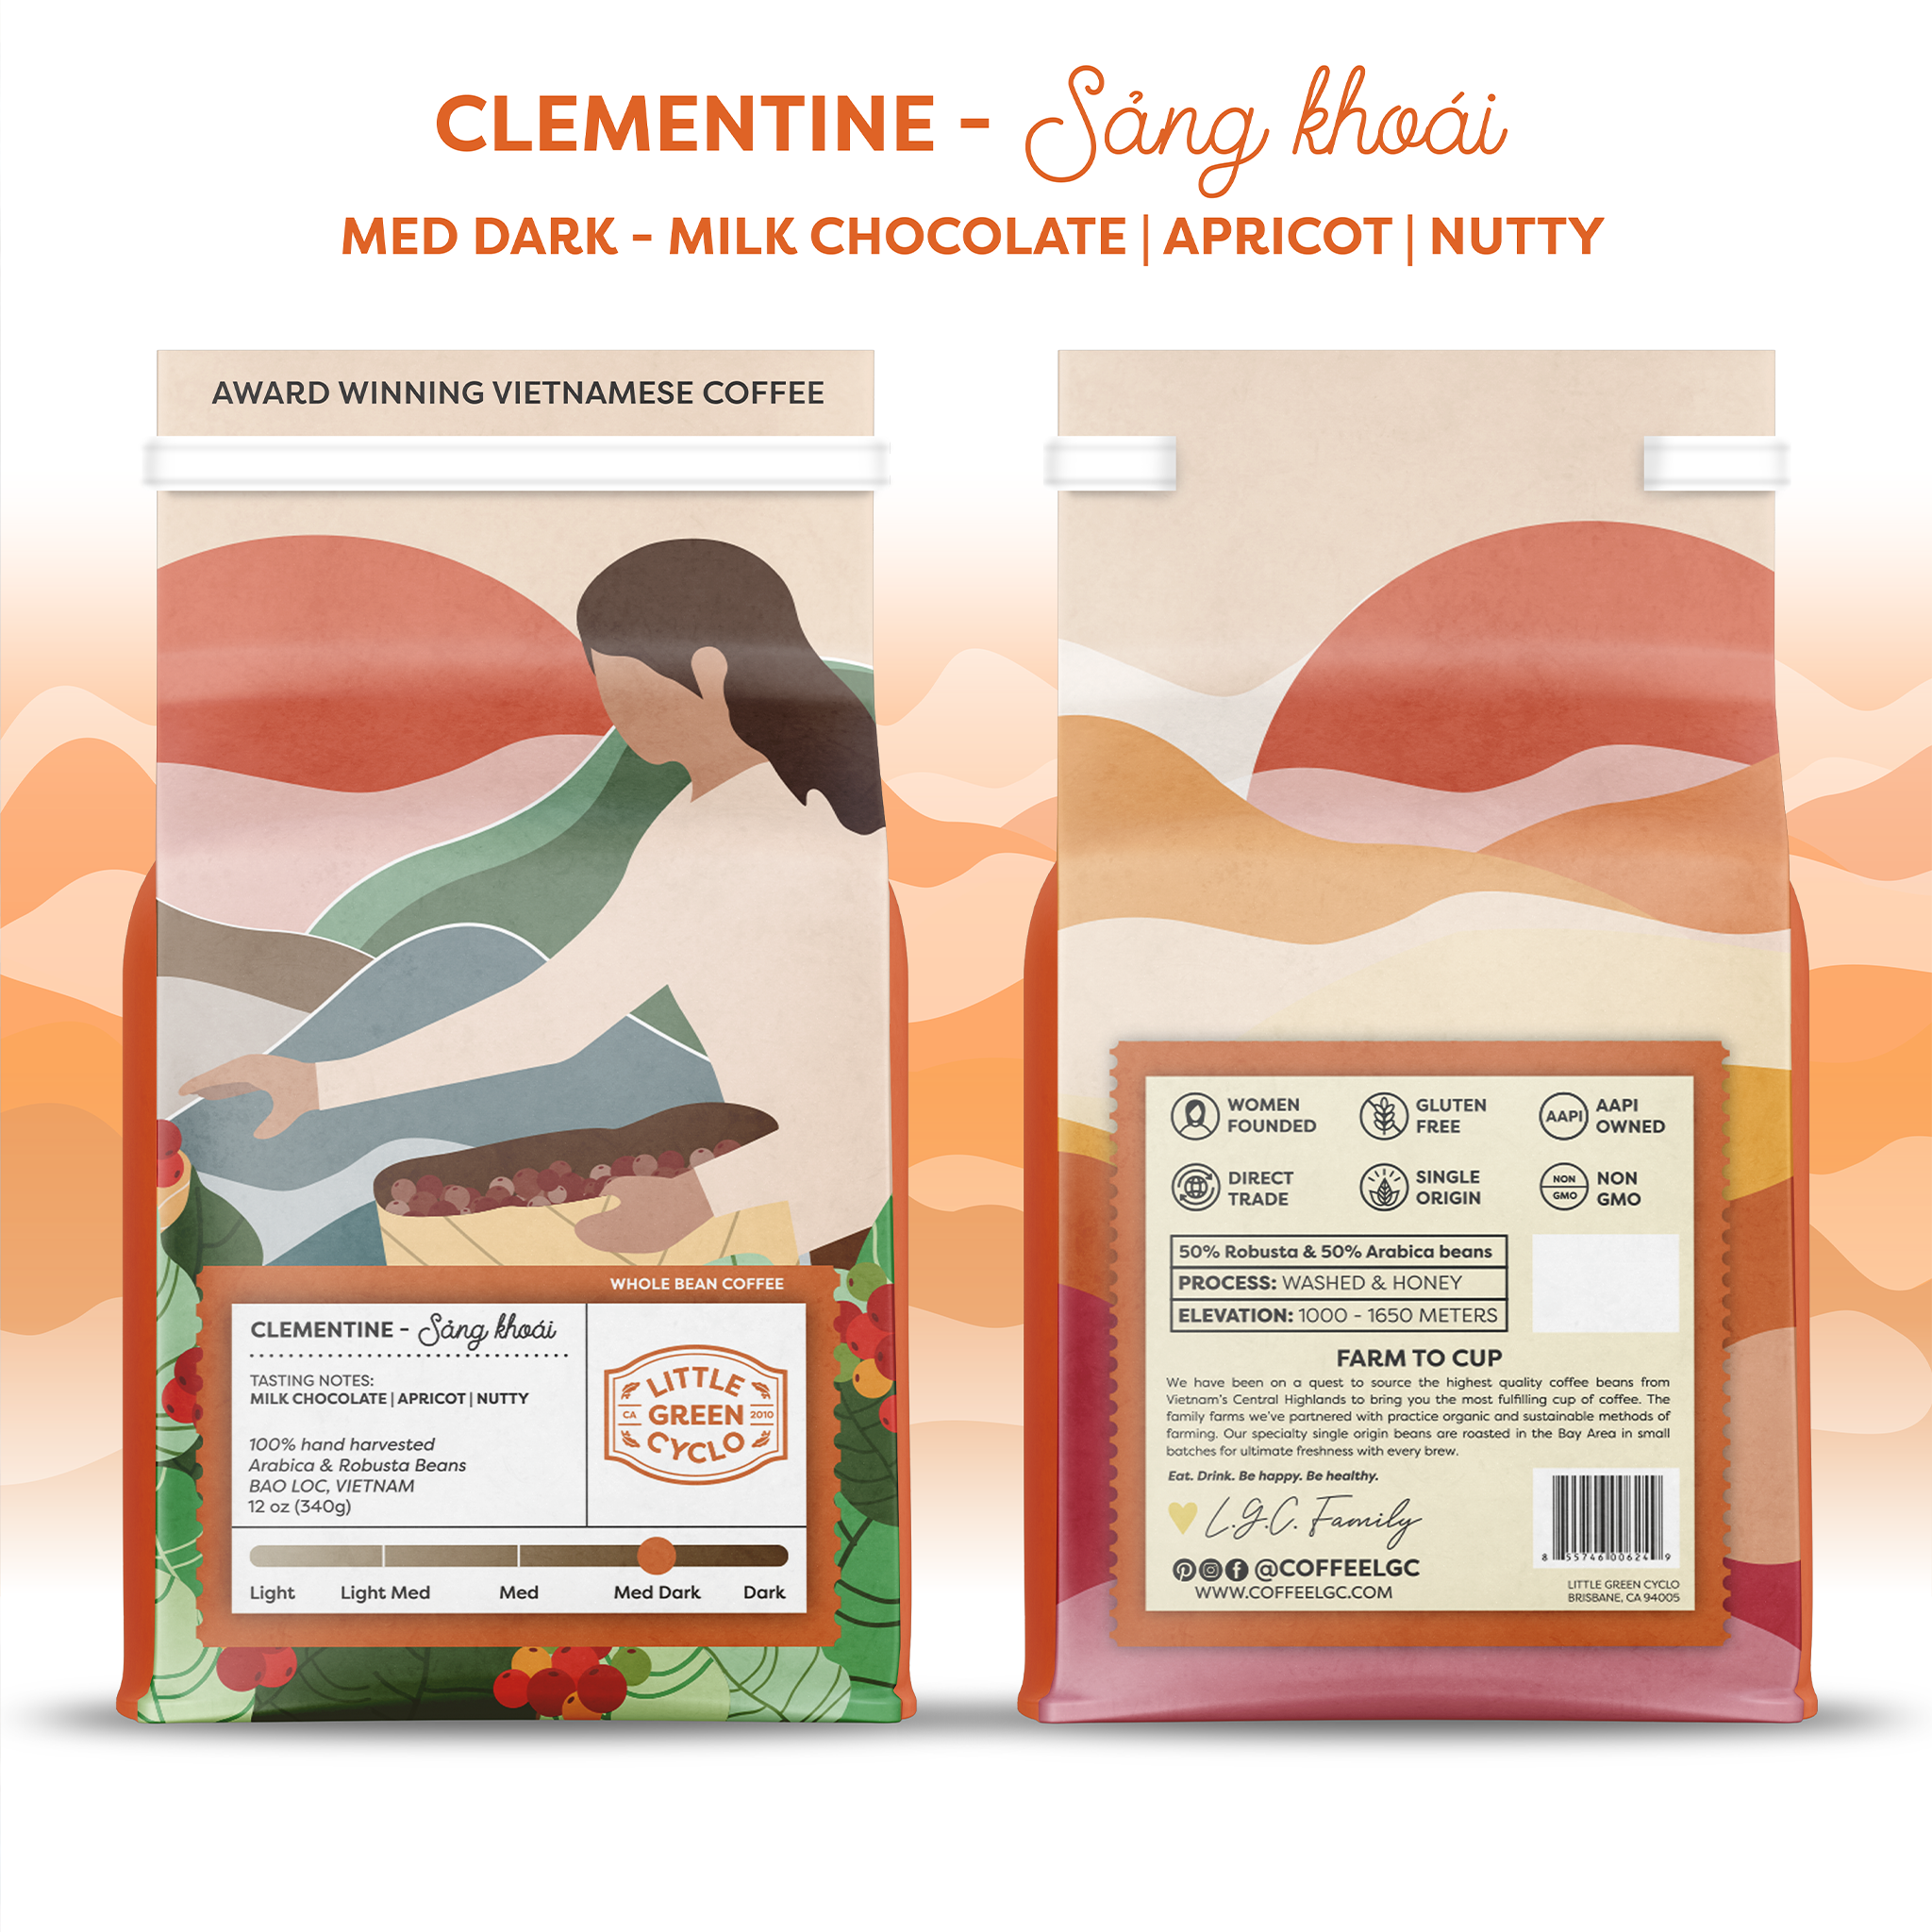 Clementine Blend - sảng khoái